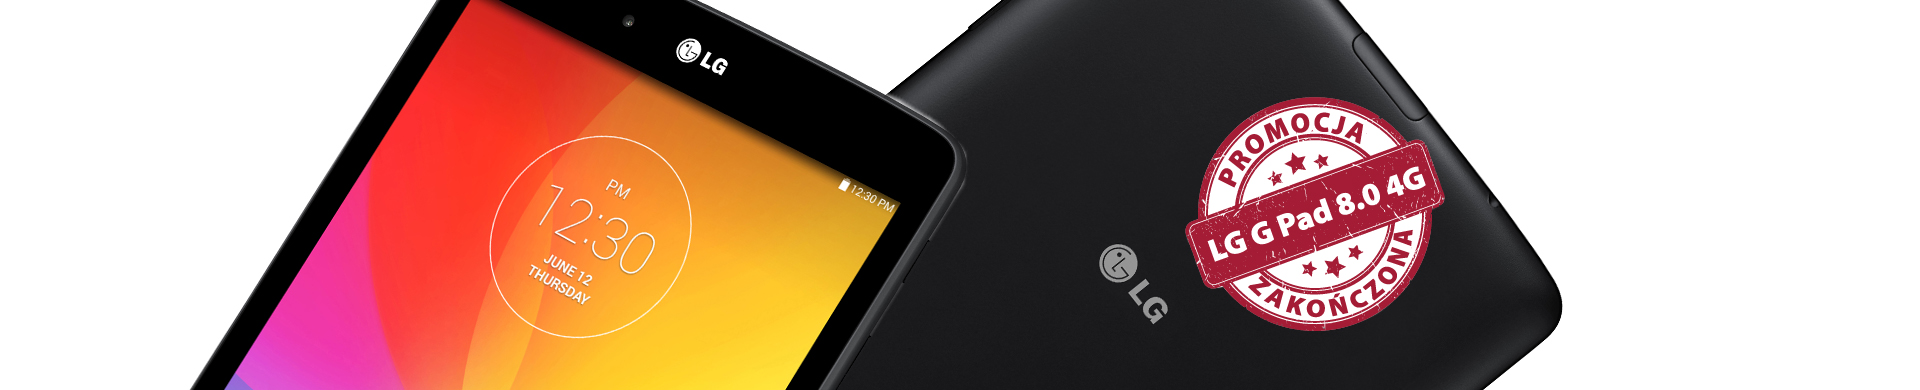 LG G Pad 8.0 4G - promocja zakończona!